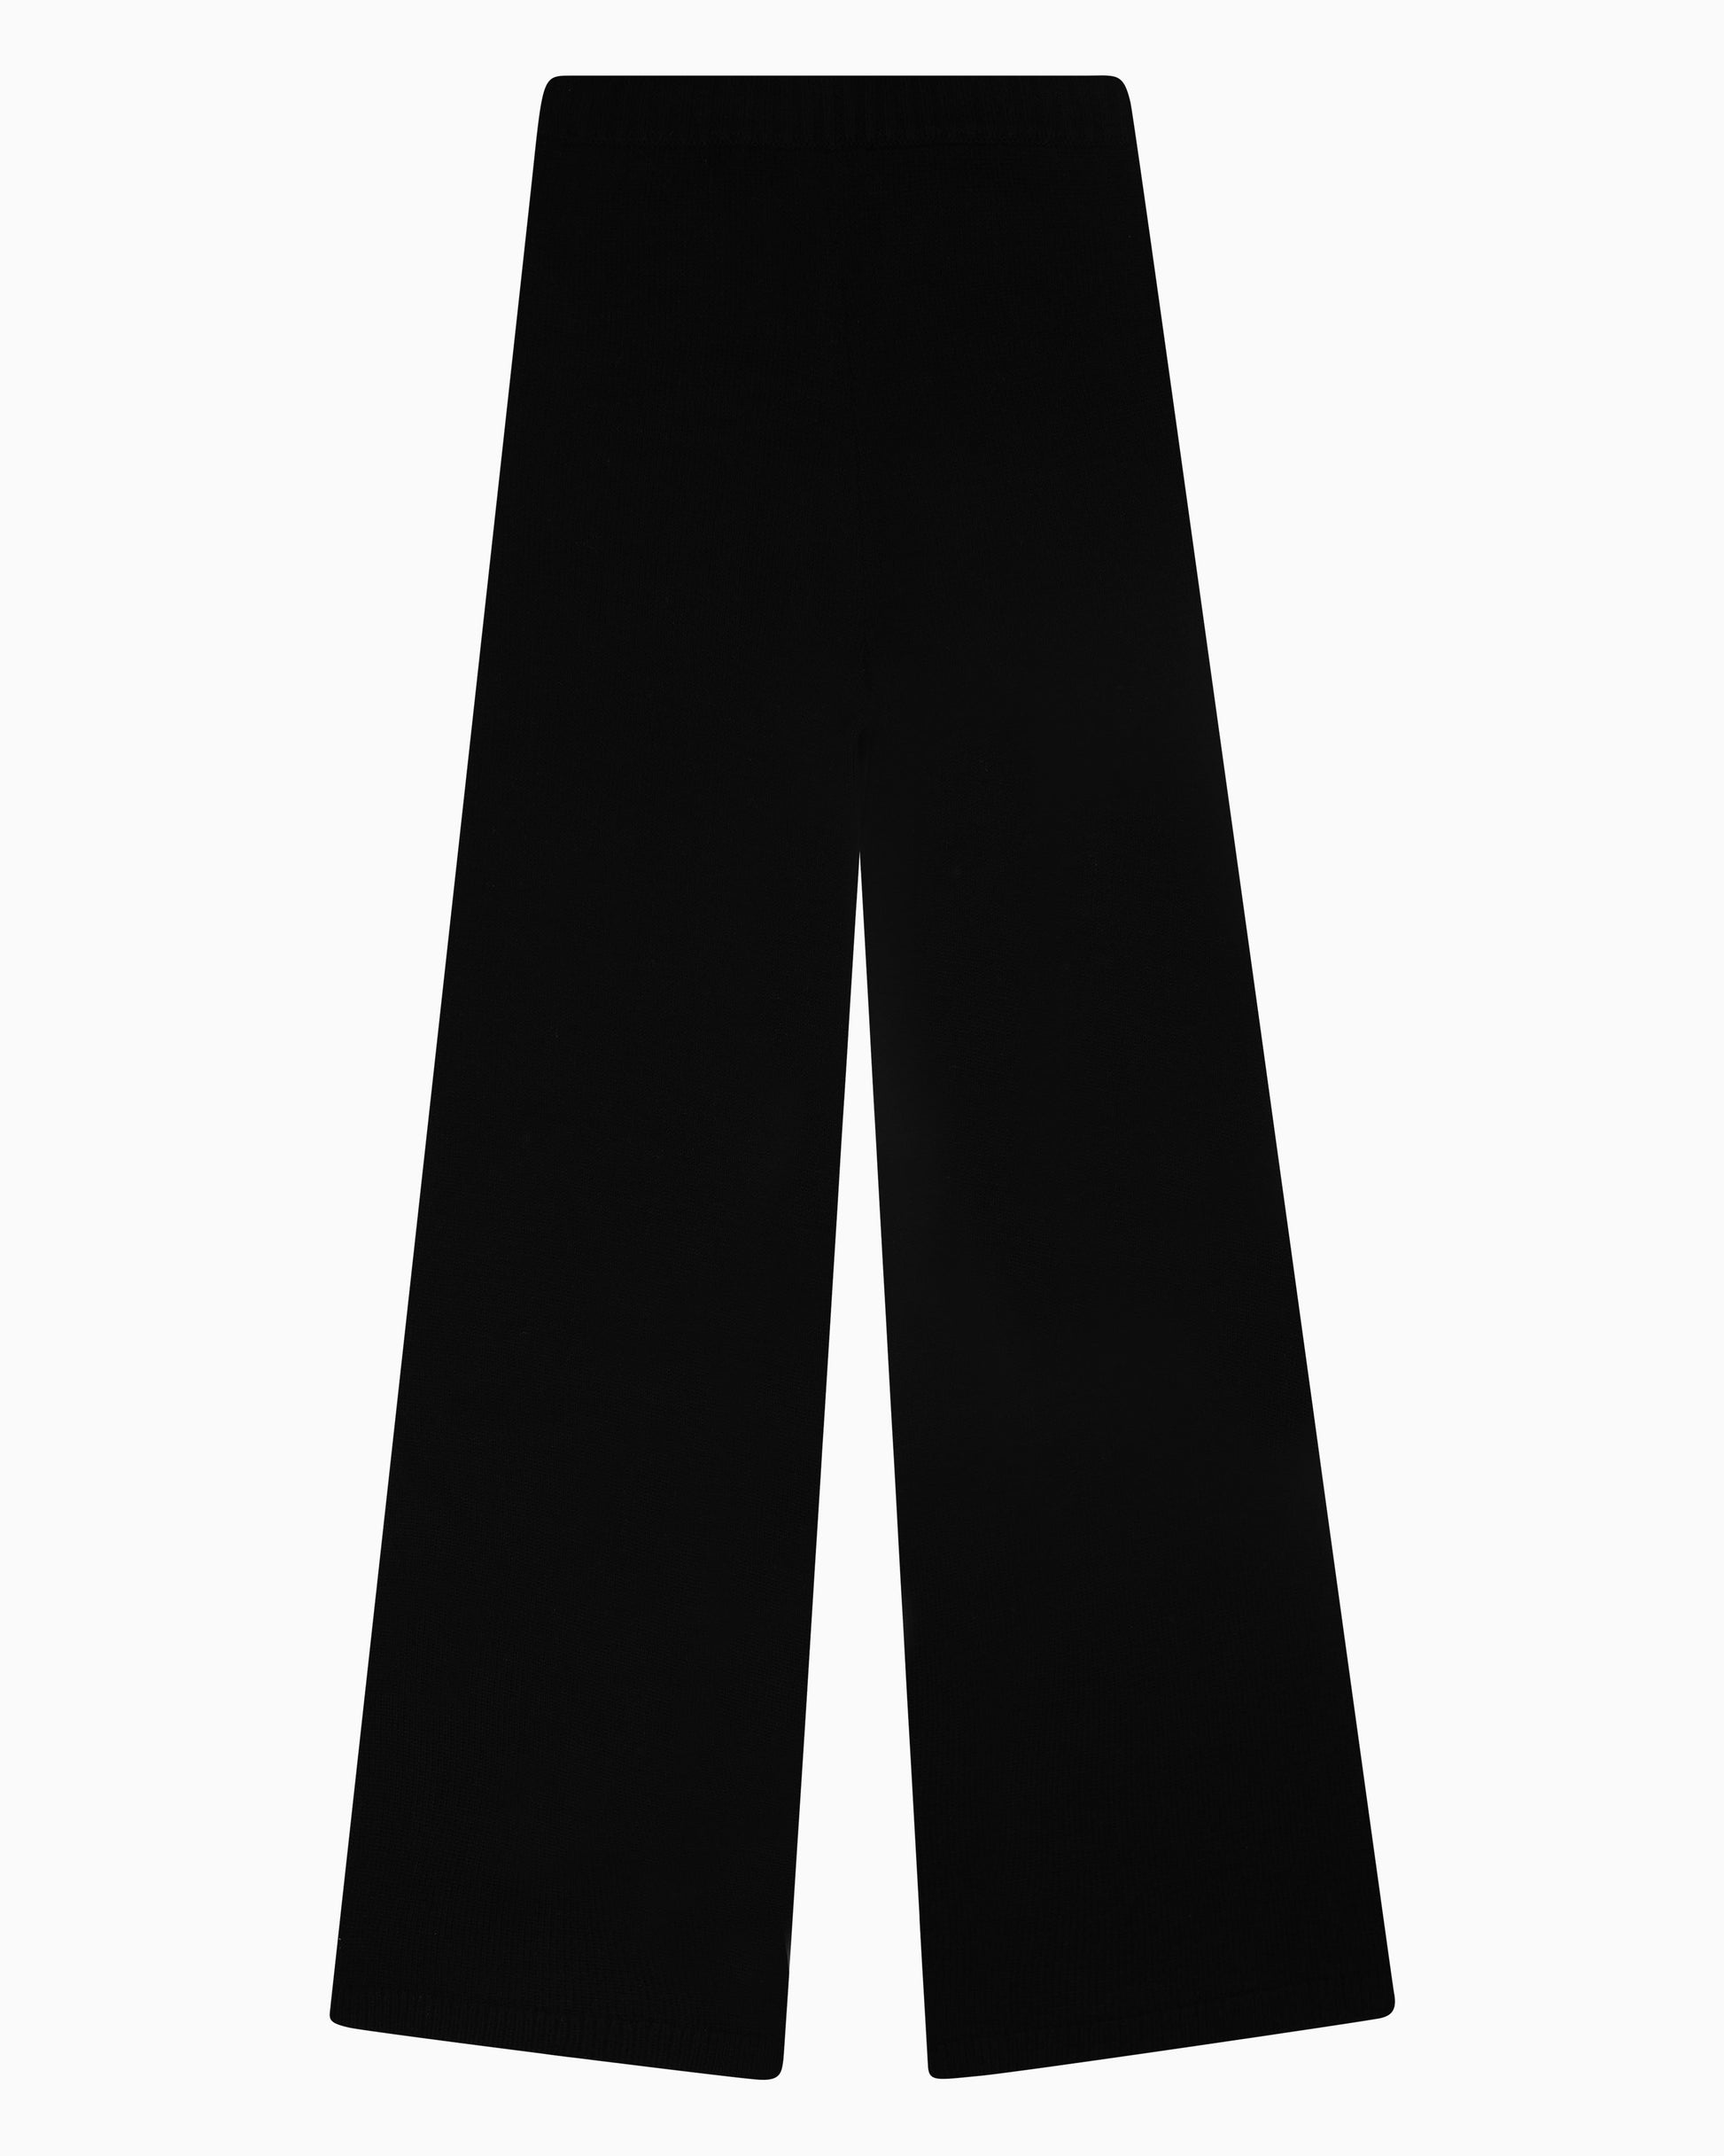 Black Byrd Classic Knit Pants by Aseye Studio